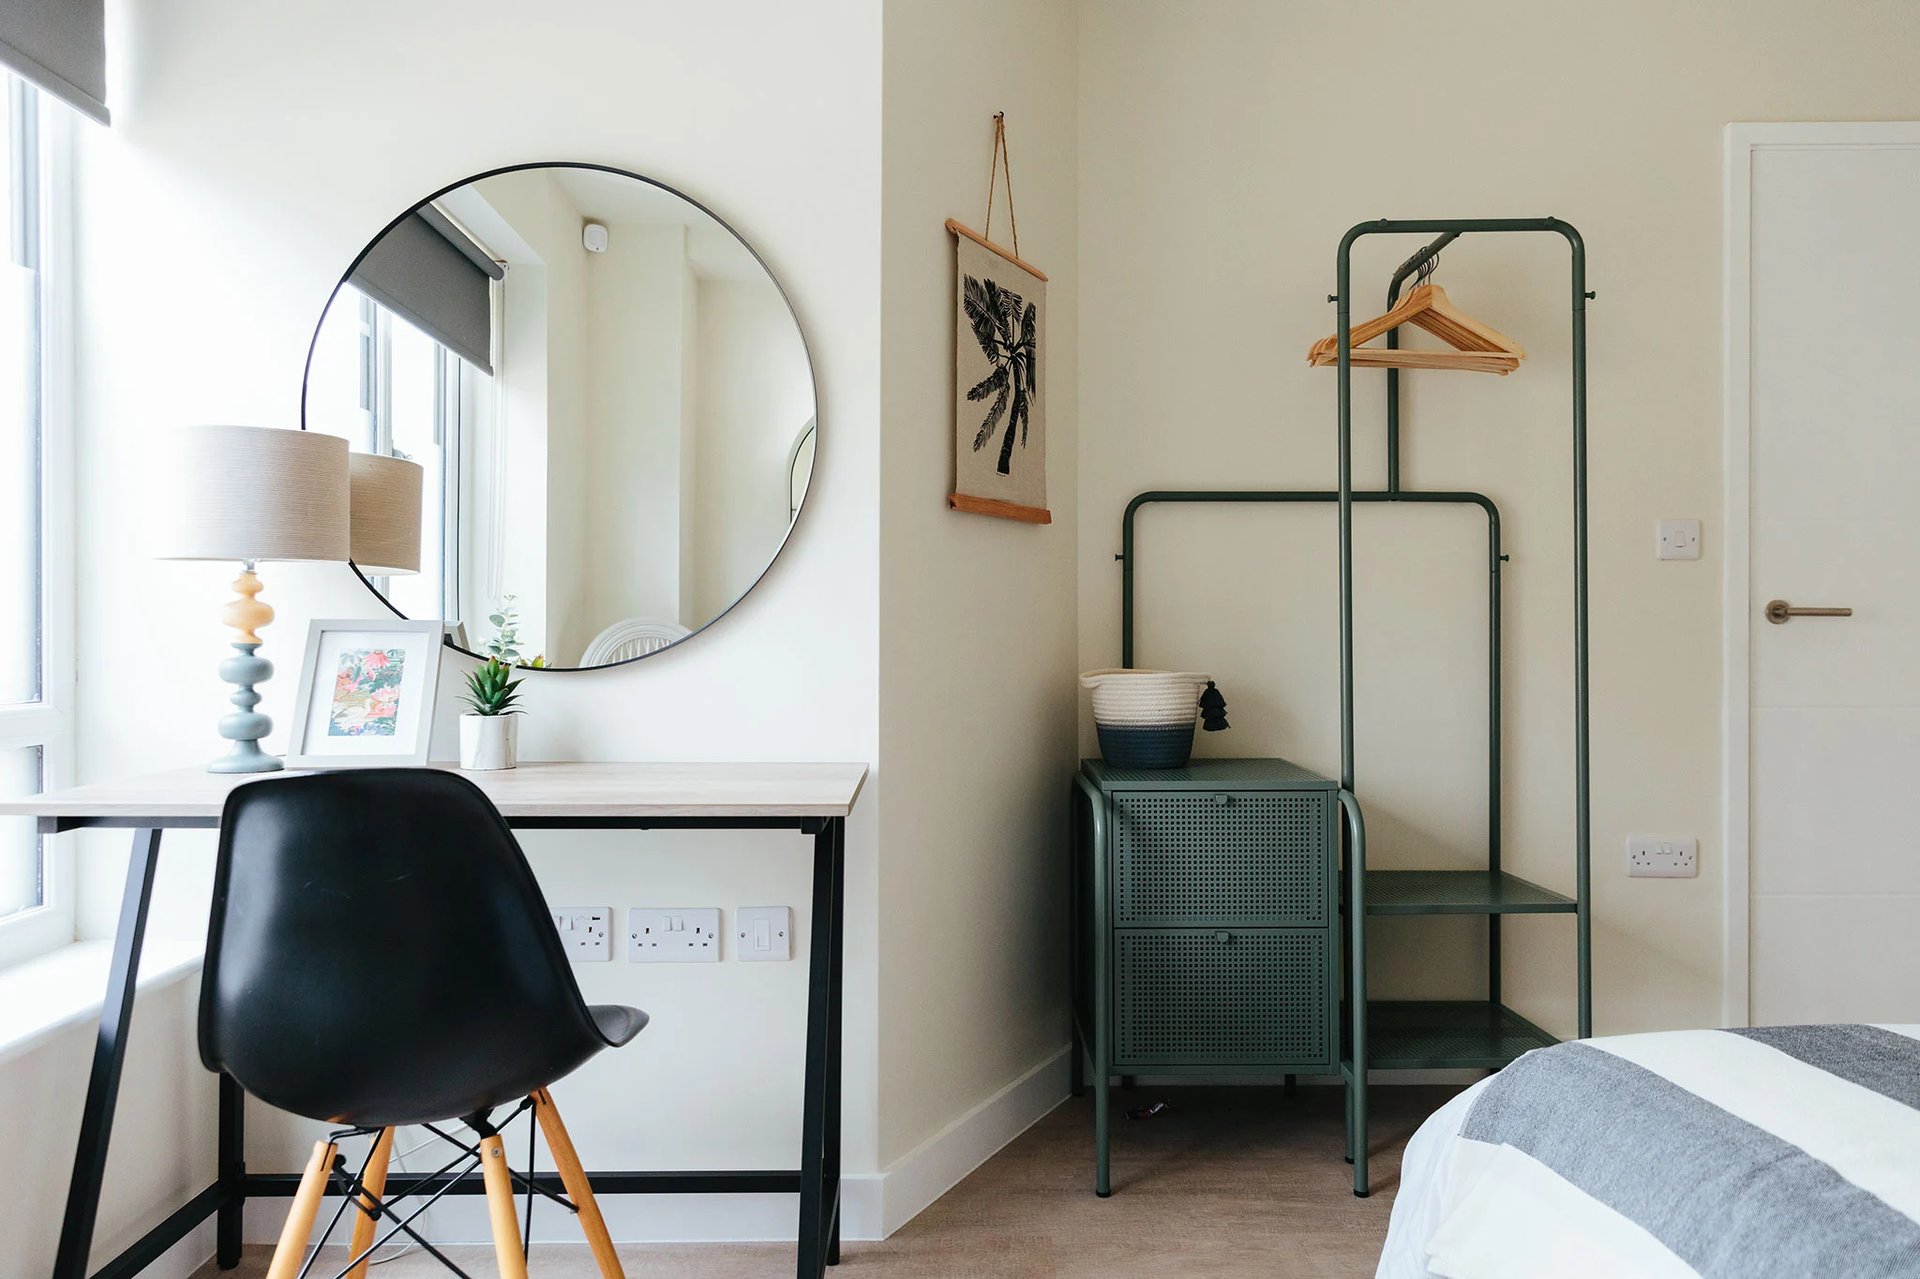 Minimilist bedroom design | simple guest bedroom ideas